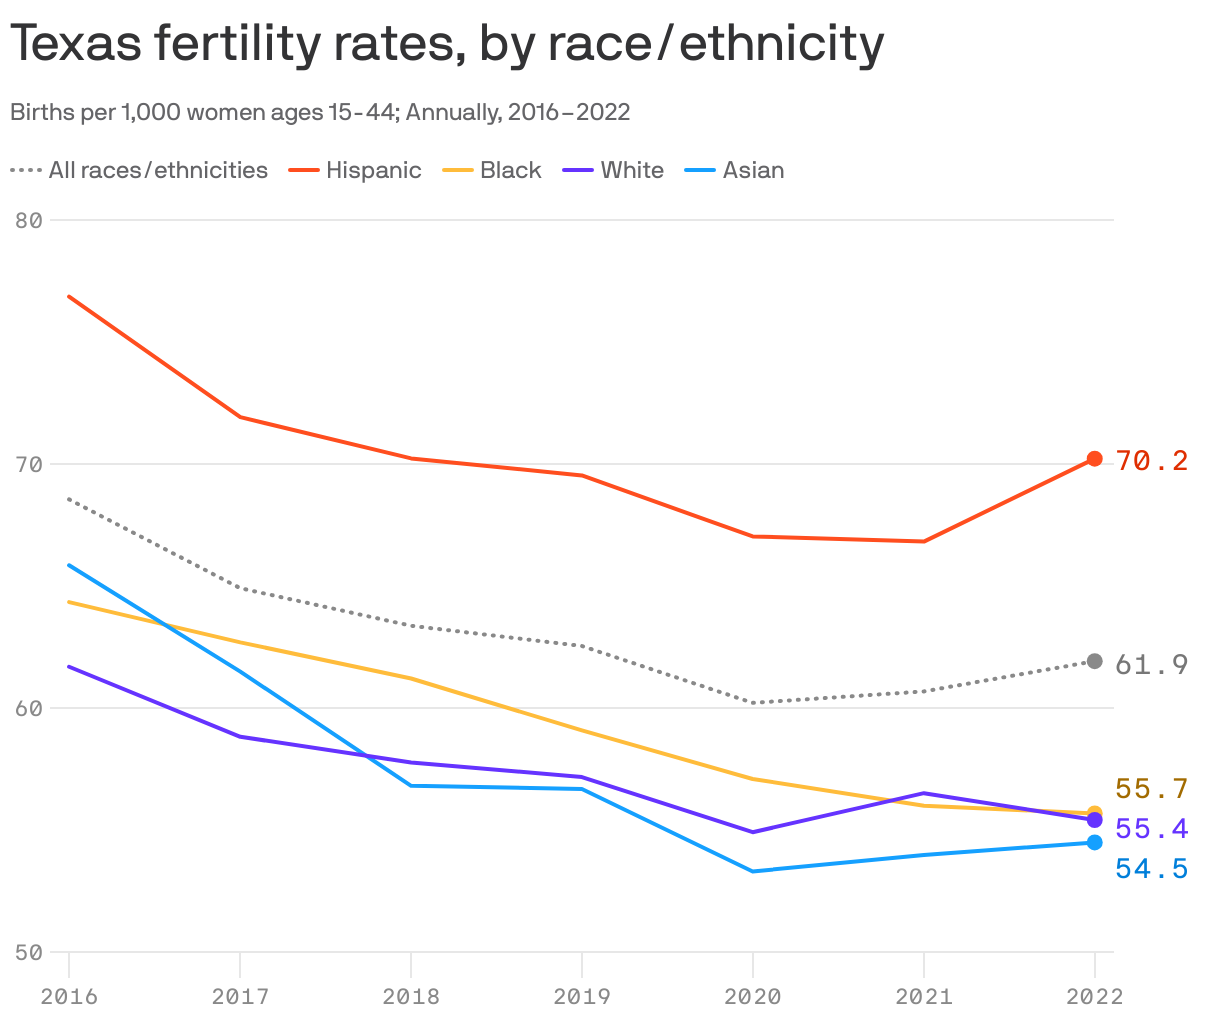 Texas fertility rates, by race/ethnicity